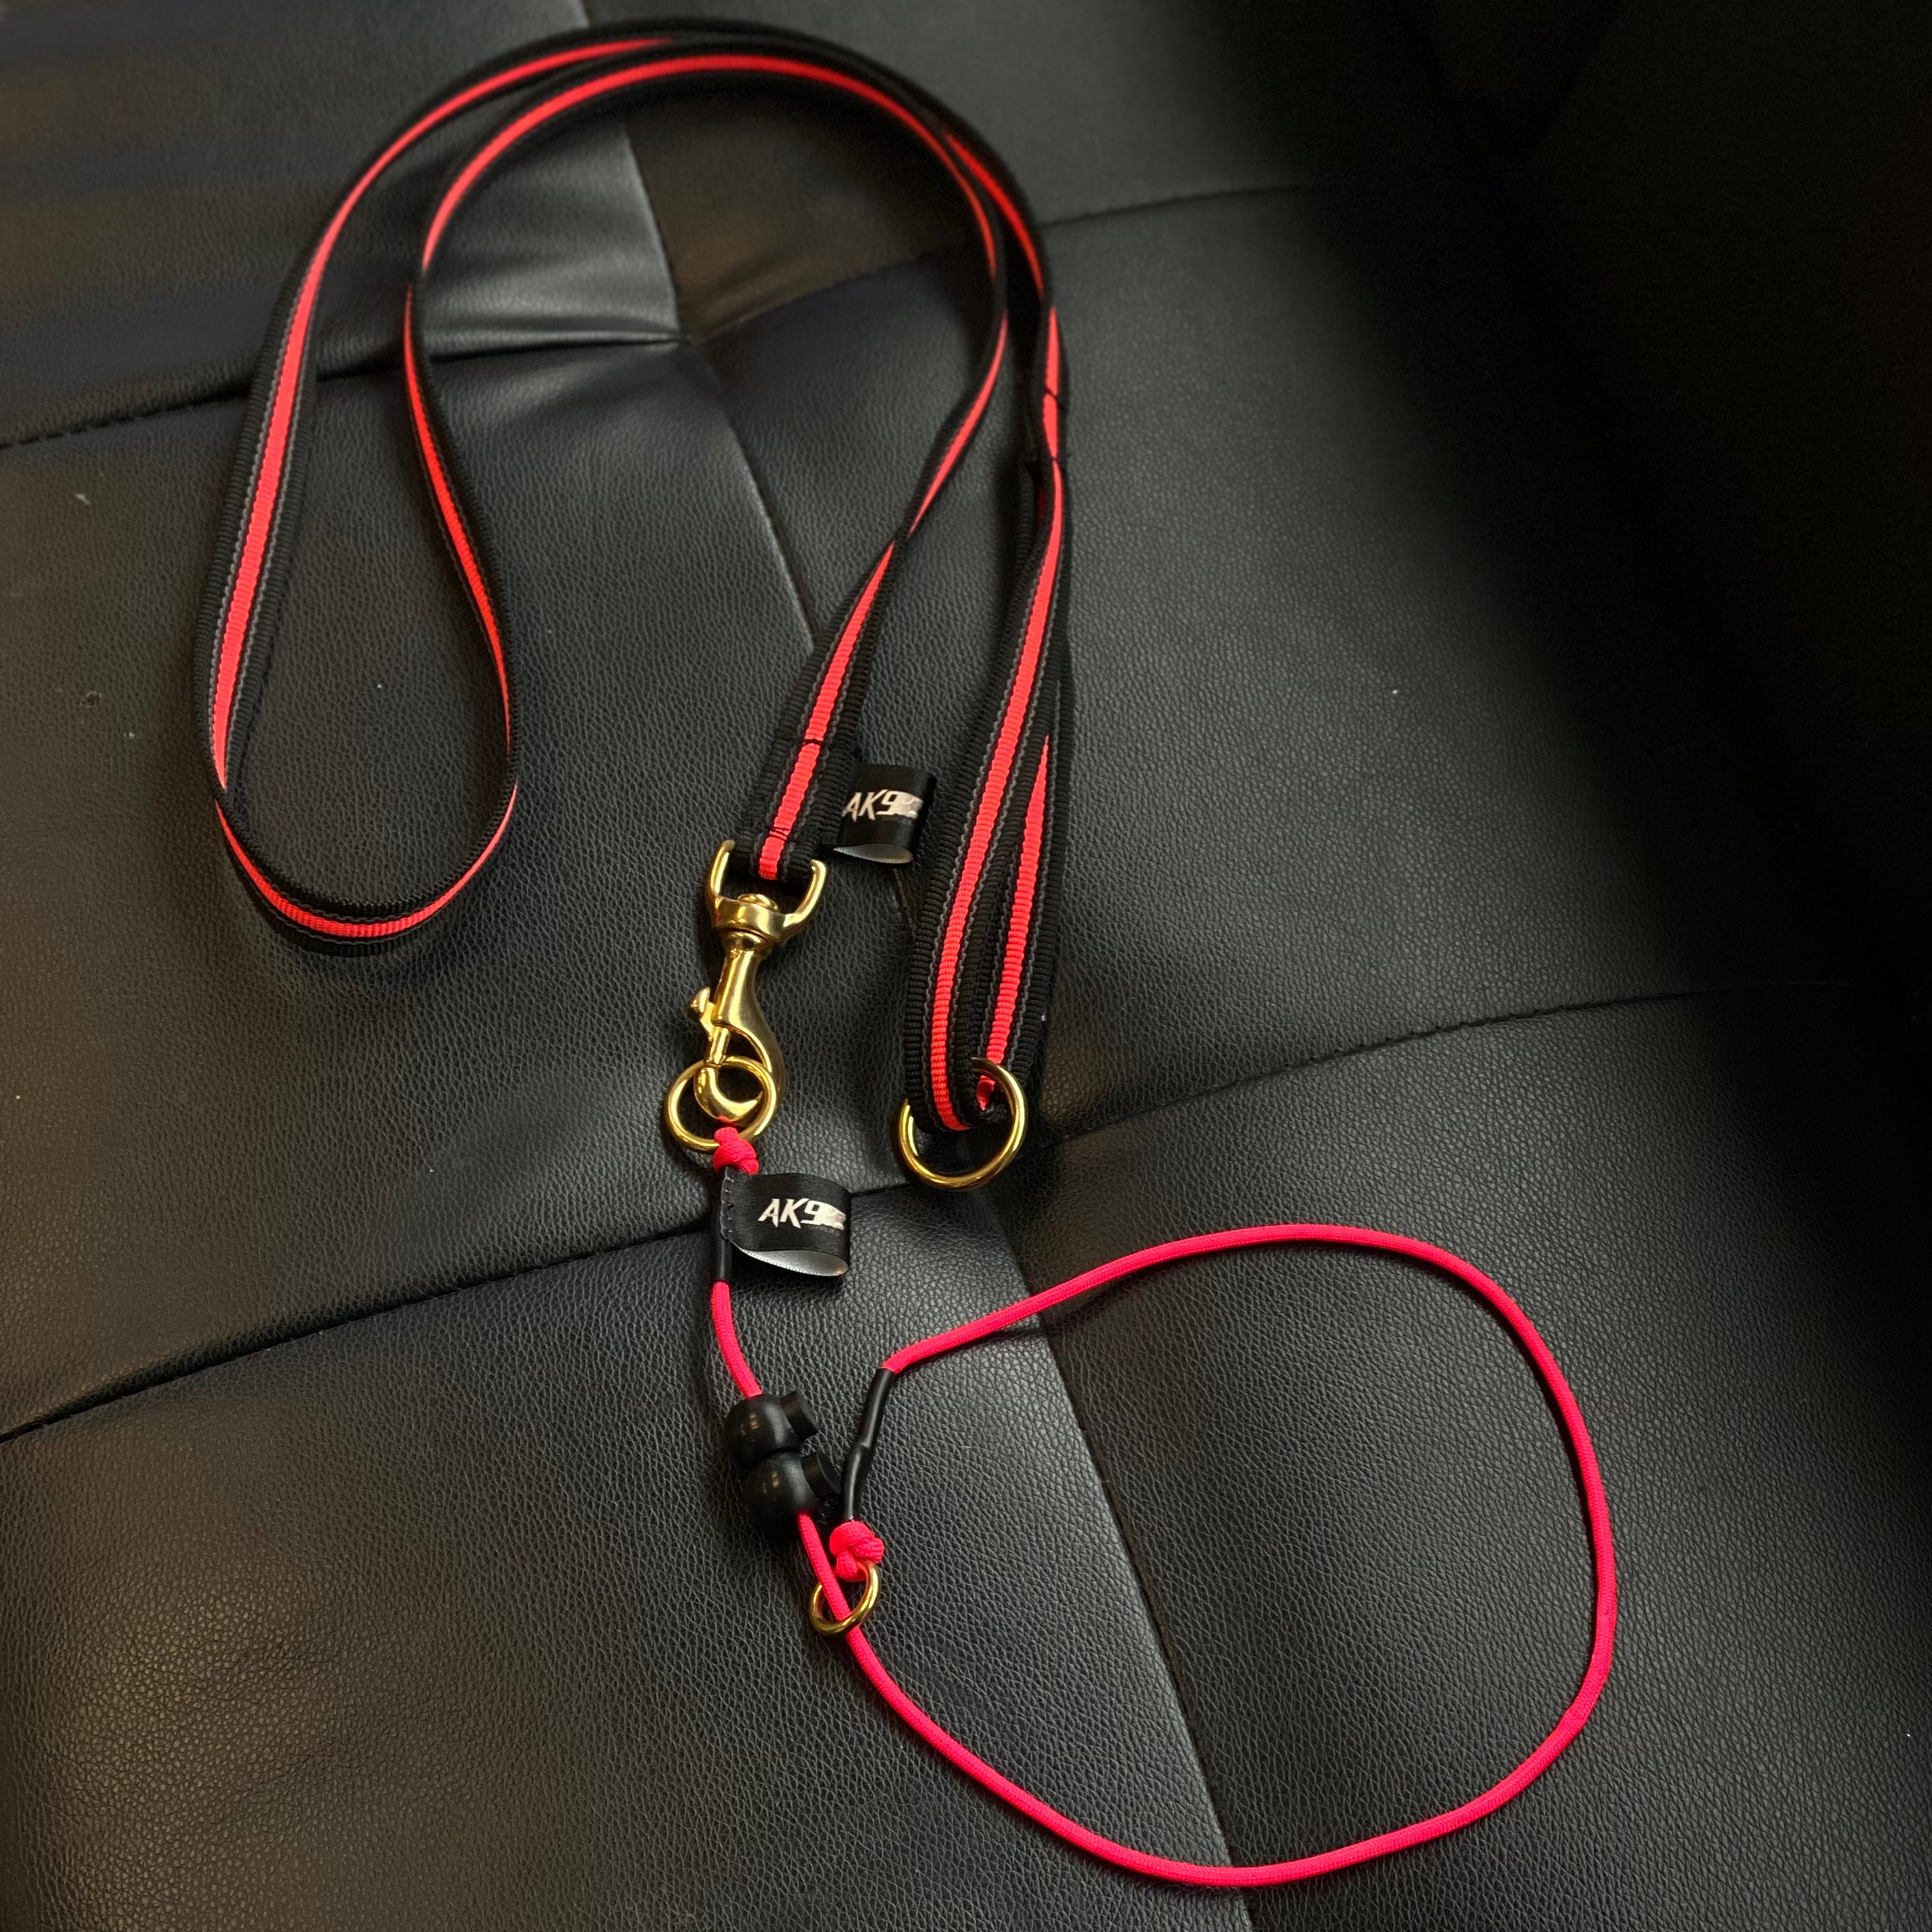 1.5 meter Rubberised Standard Neon Pink Lead and Slip collar set